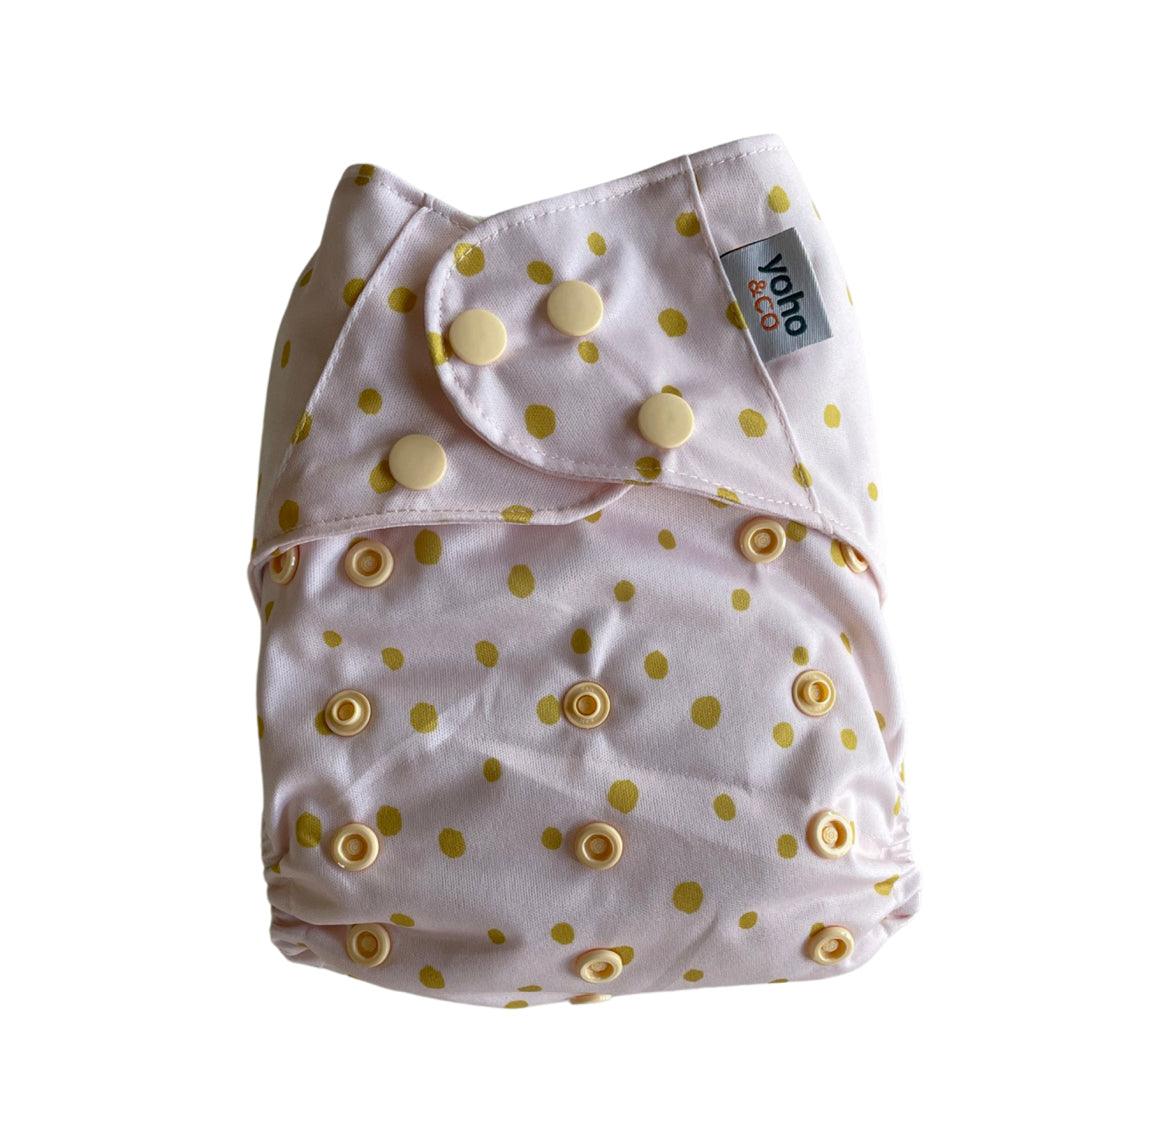 Yoho Baby & co. Reusable Classic Cotton Cloth Nappy NZ - Yellow Polka Dot Print